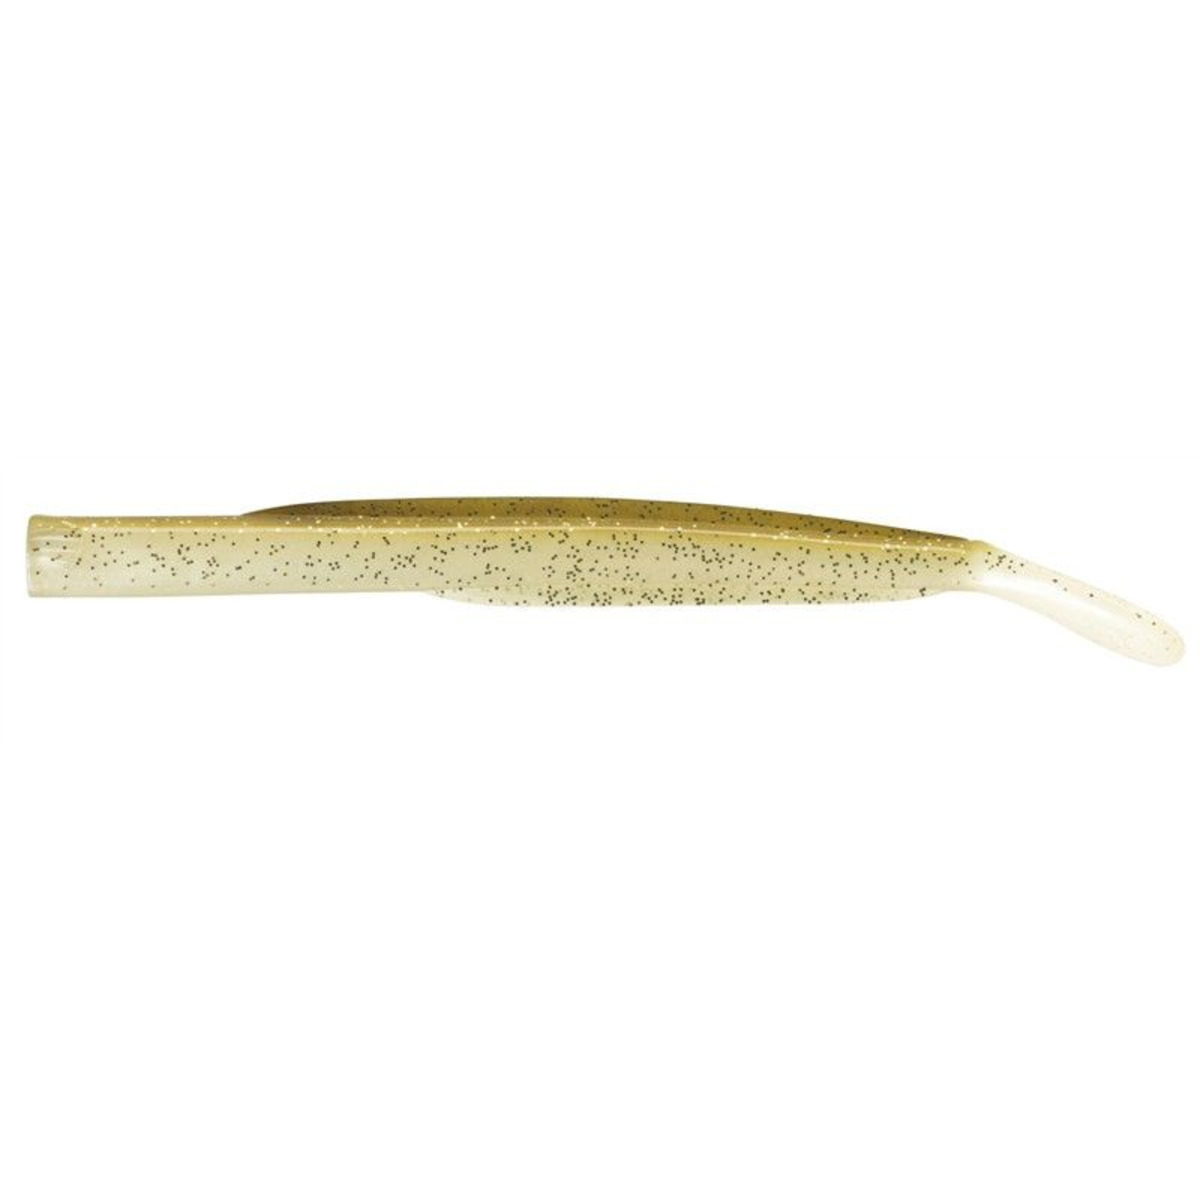 Berkley Prerigged Eels - 15 cm - 15 g (jig head) - Ayu